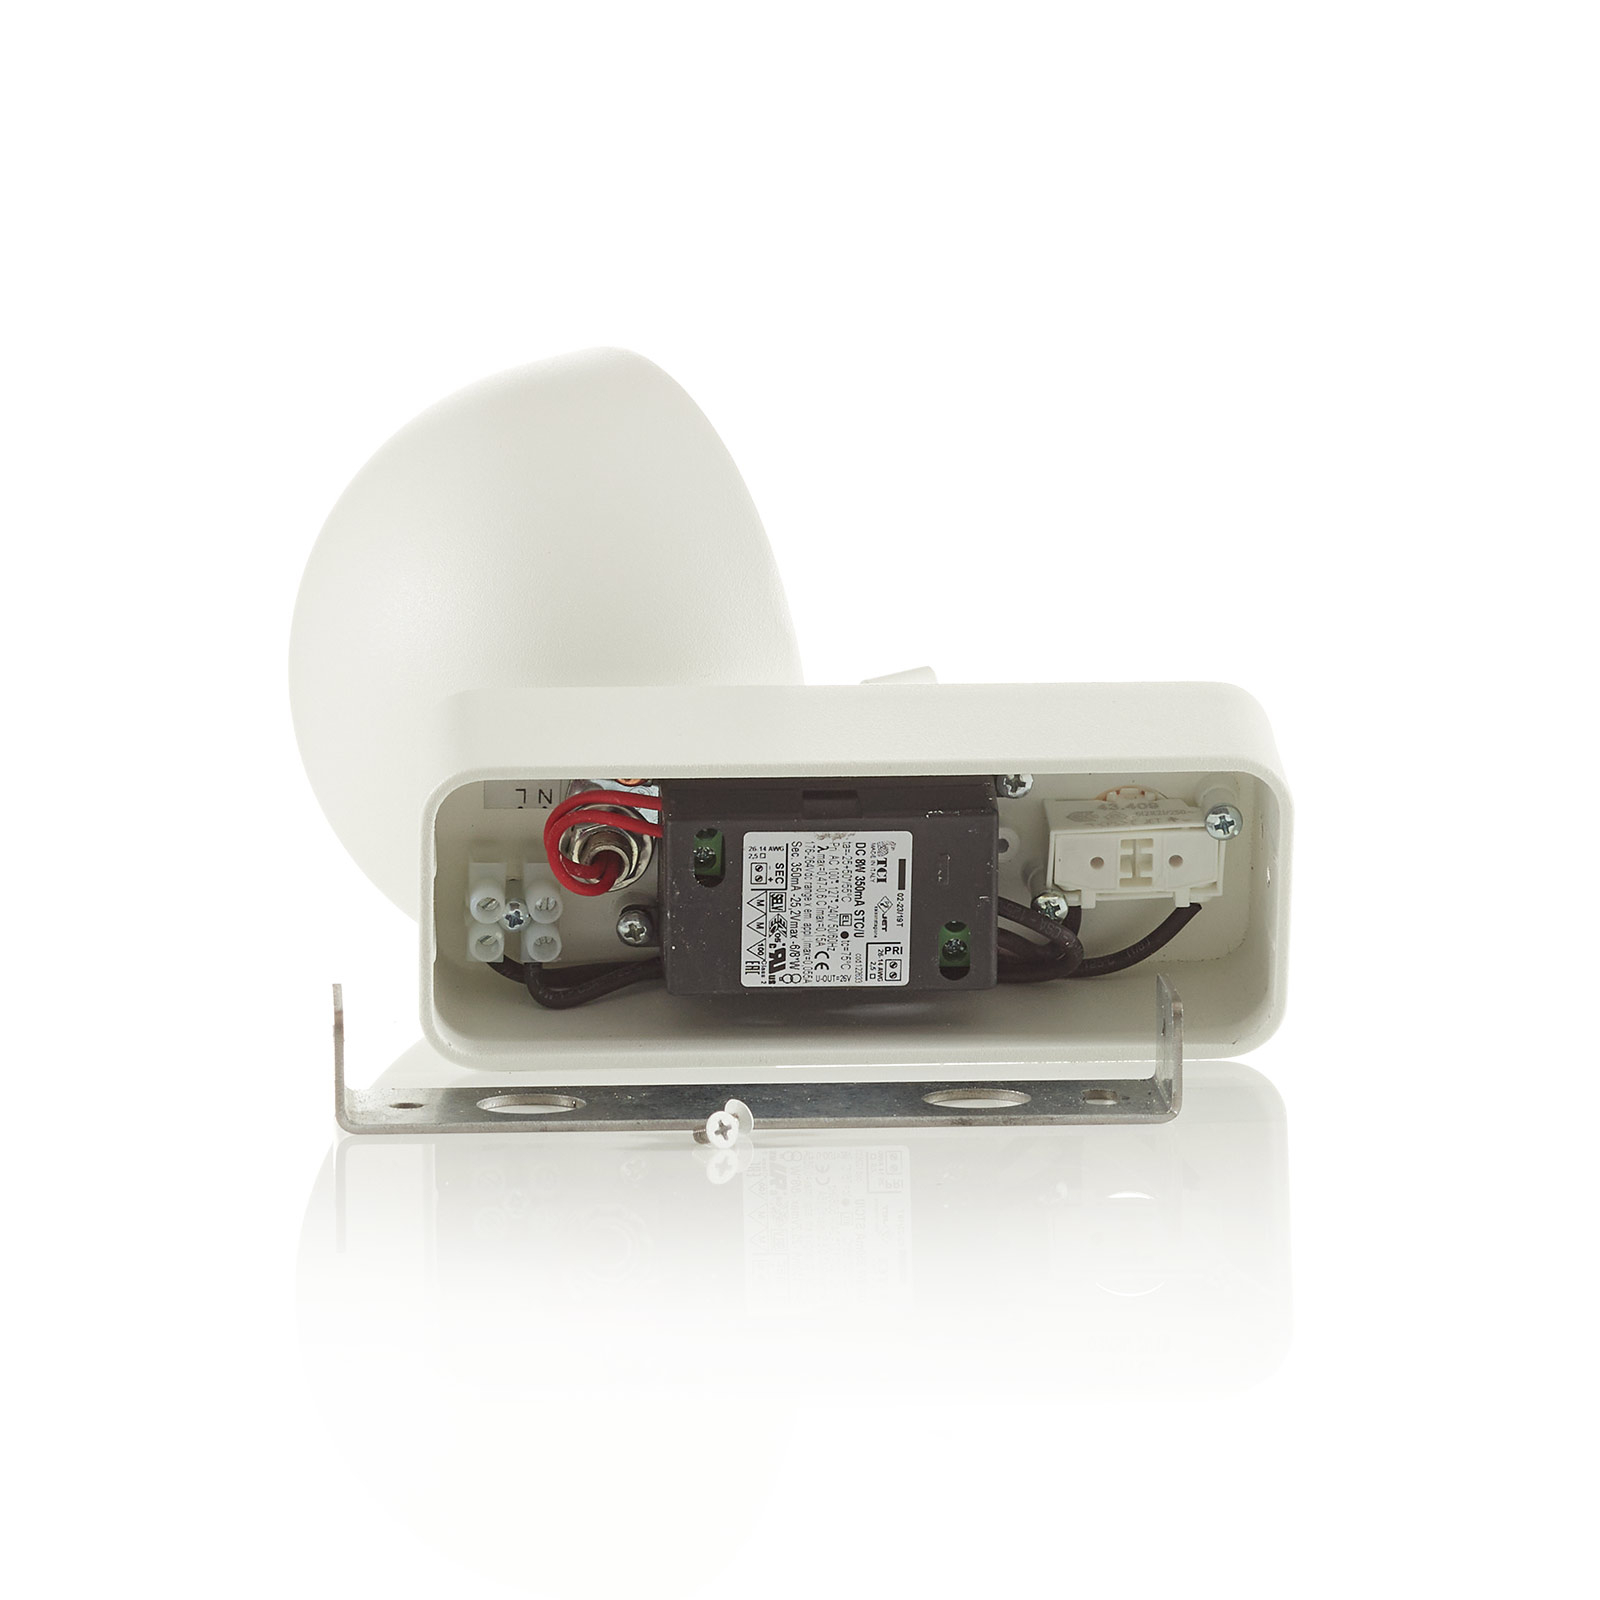 Bover Beddy A/01 LED-Wandlampe drehbar weiß/weiß